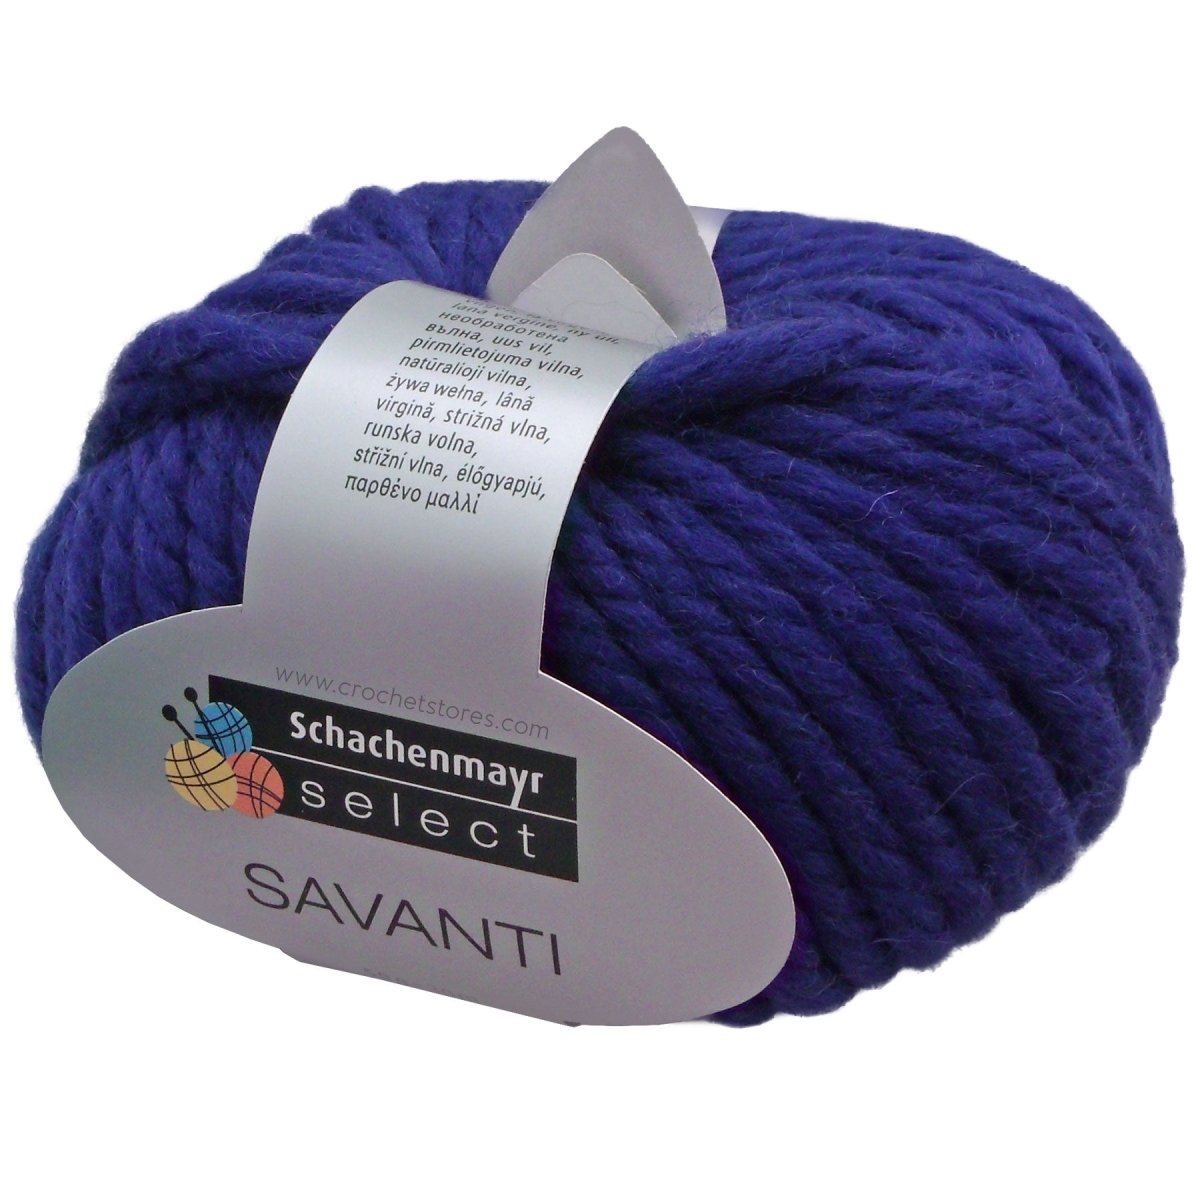 SAVANTI - Crochetstores9811771-47564082700488308